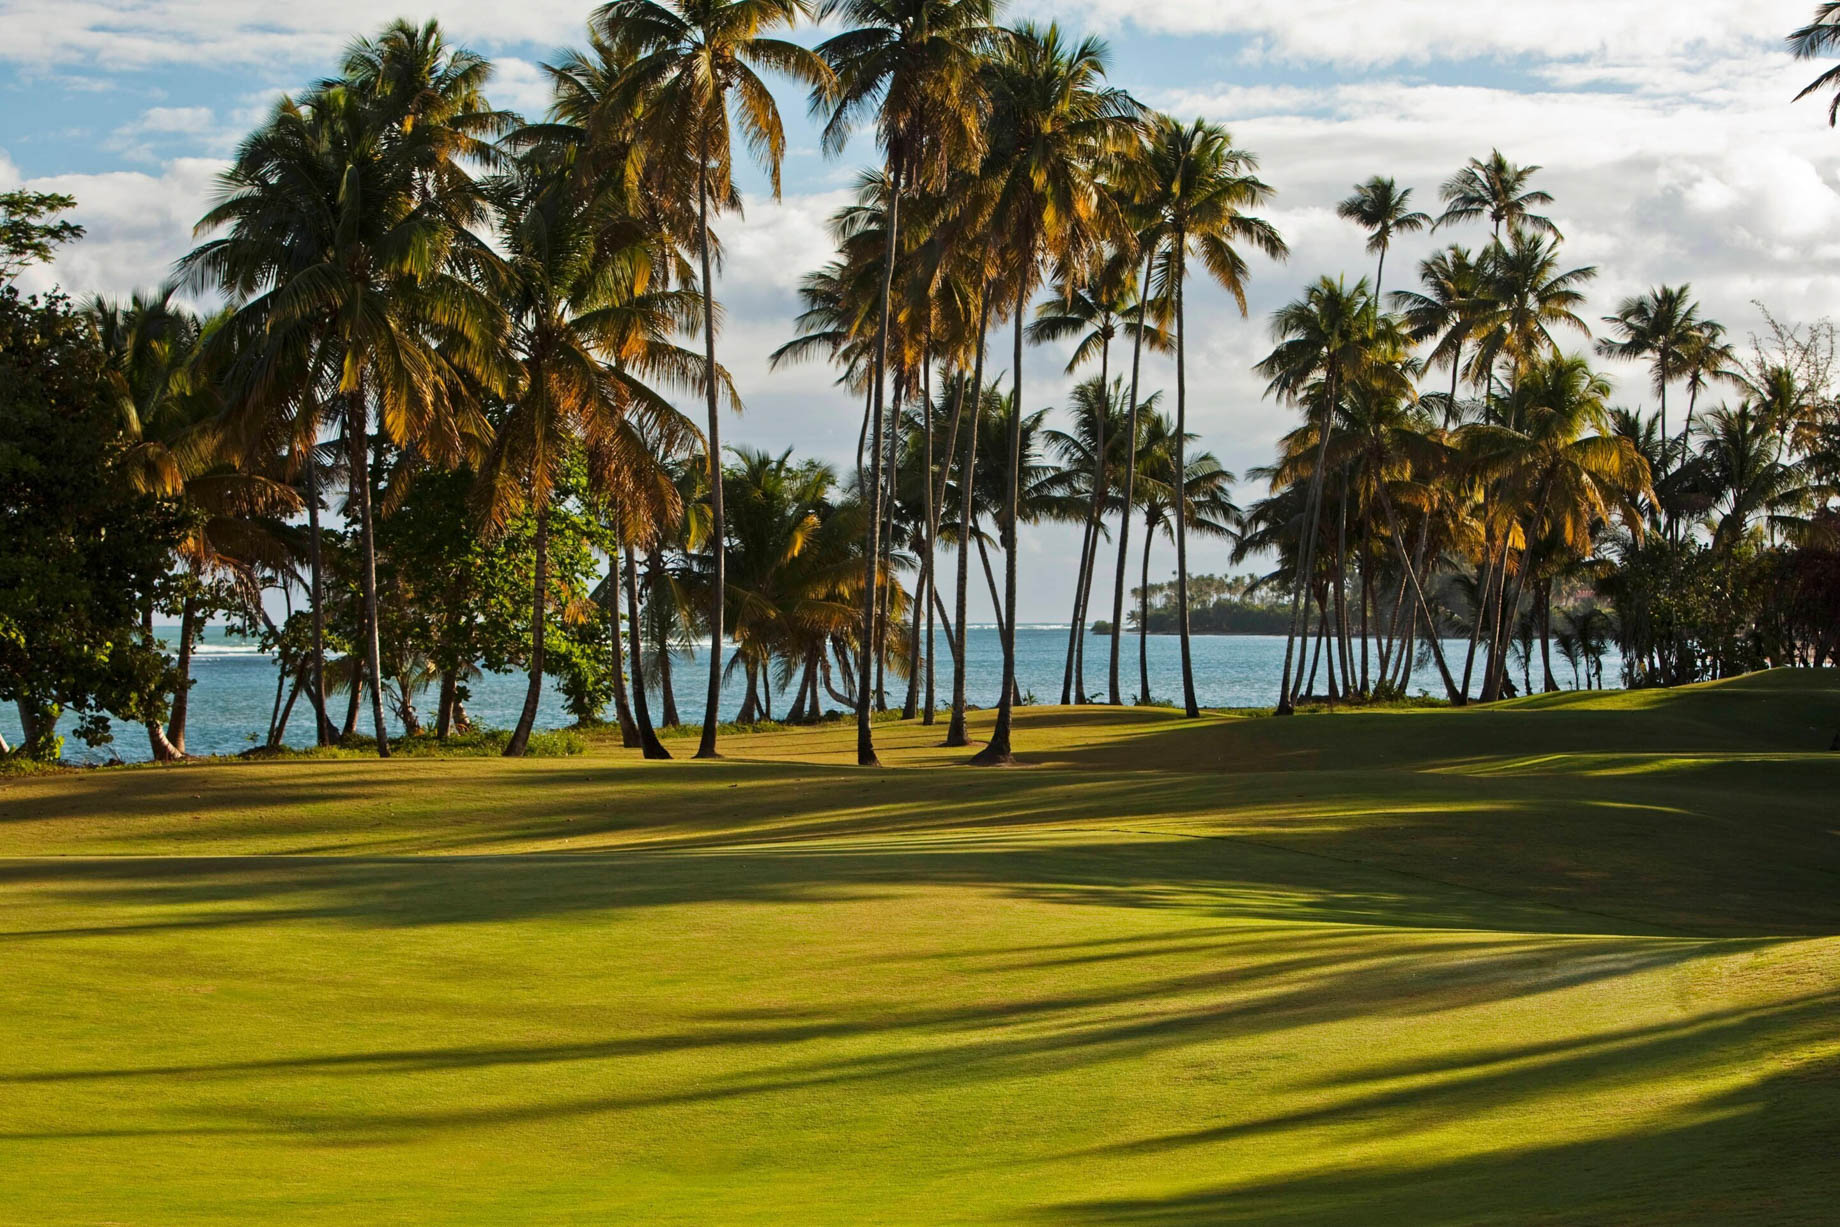 The St. Regis Bahia Beach Resort – Rio Grande, Puerto Rico – Seaside Golf Course